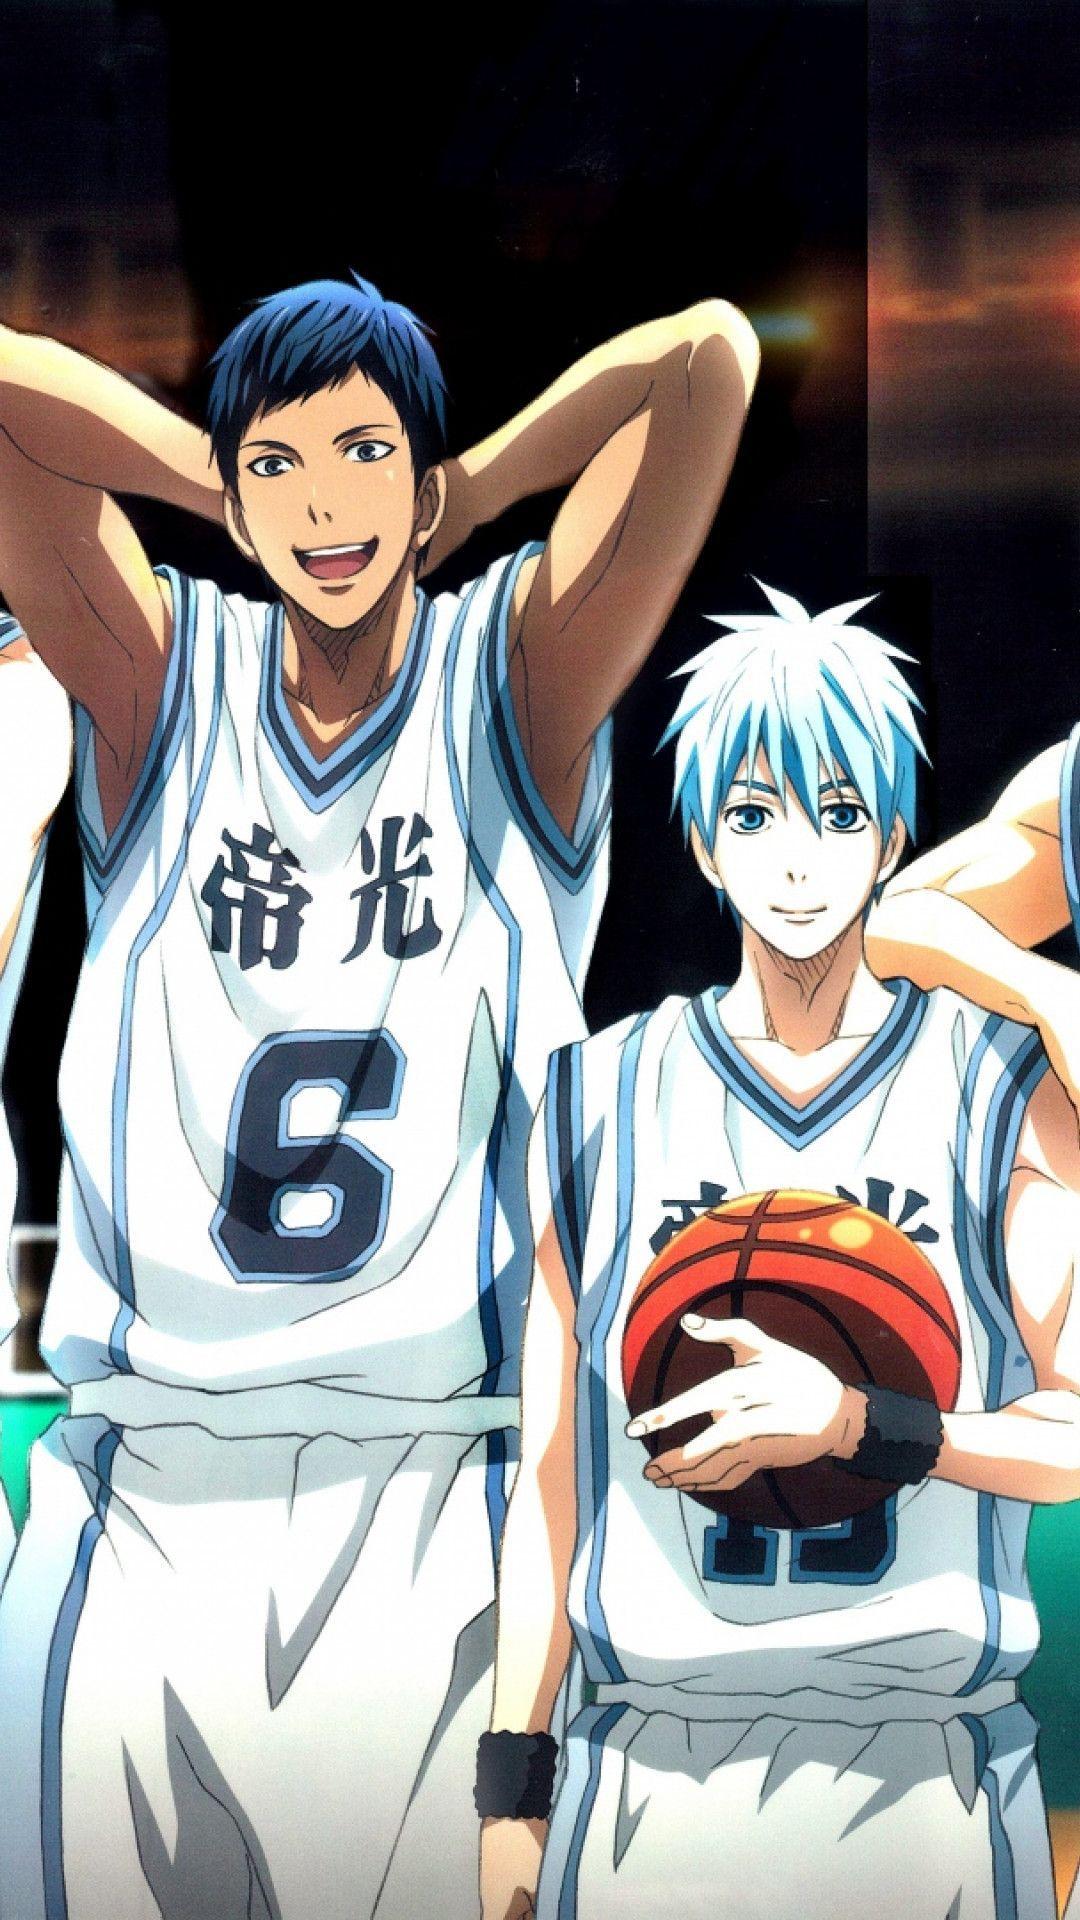 Wallpaper ID 398780  Anime Kurokos Basketball Phone Wallpaper Tetsuya  Kuroko 1080x1920 free download